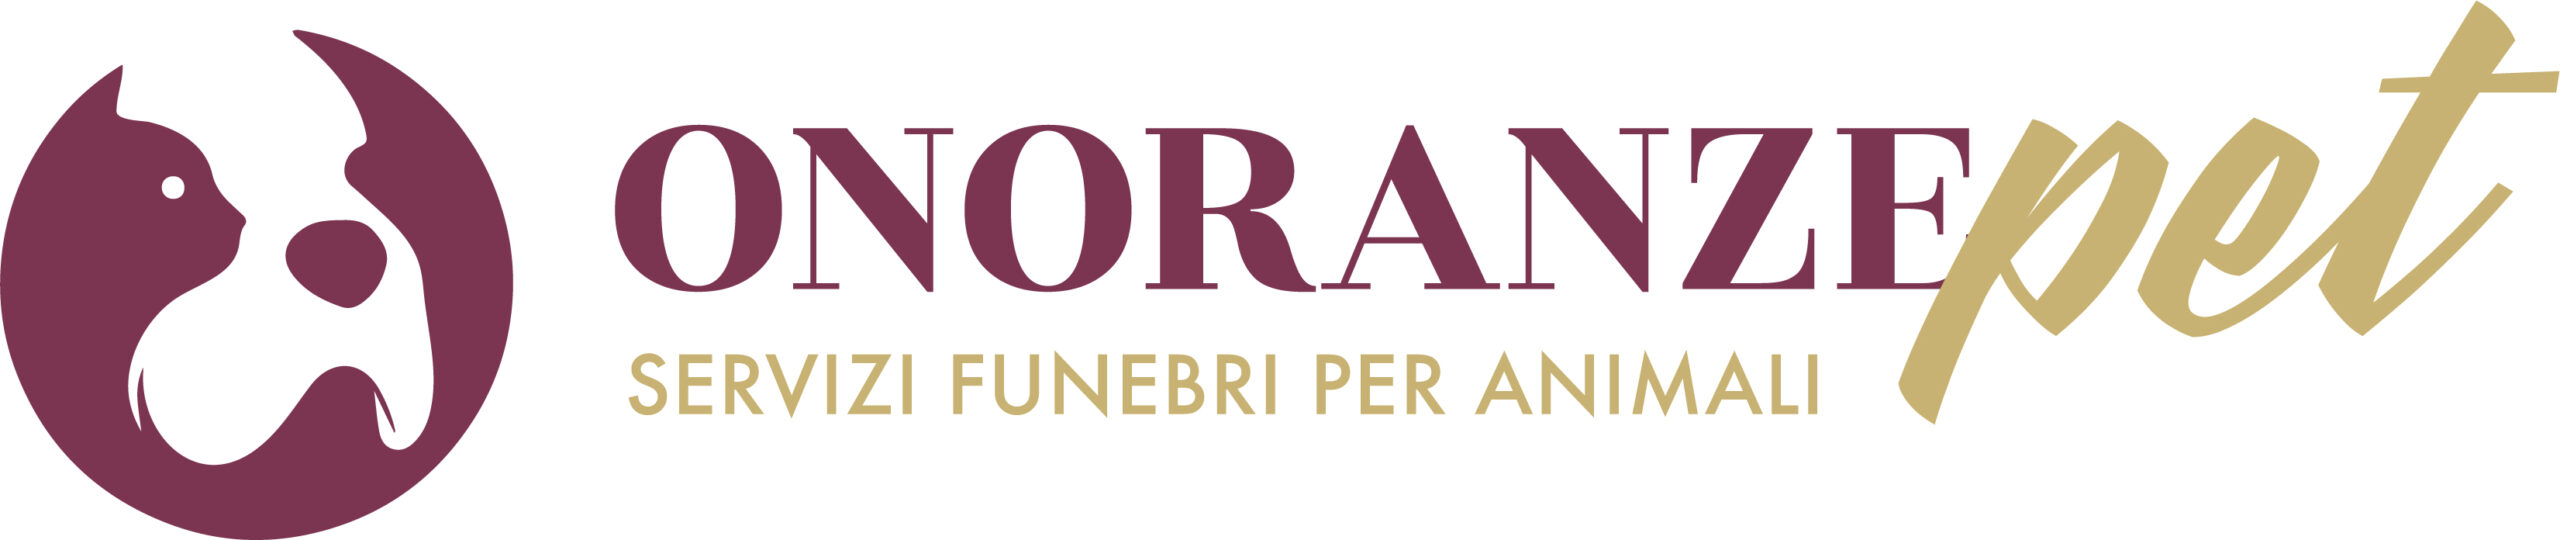 Brand-Onoranze-Funebri-Agenzia-di-Marketing-Roma-Digital-Producer5